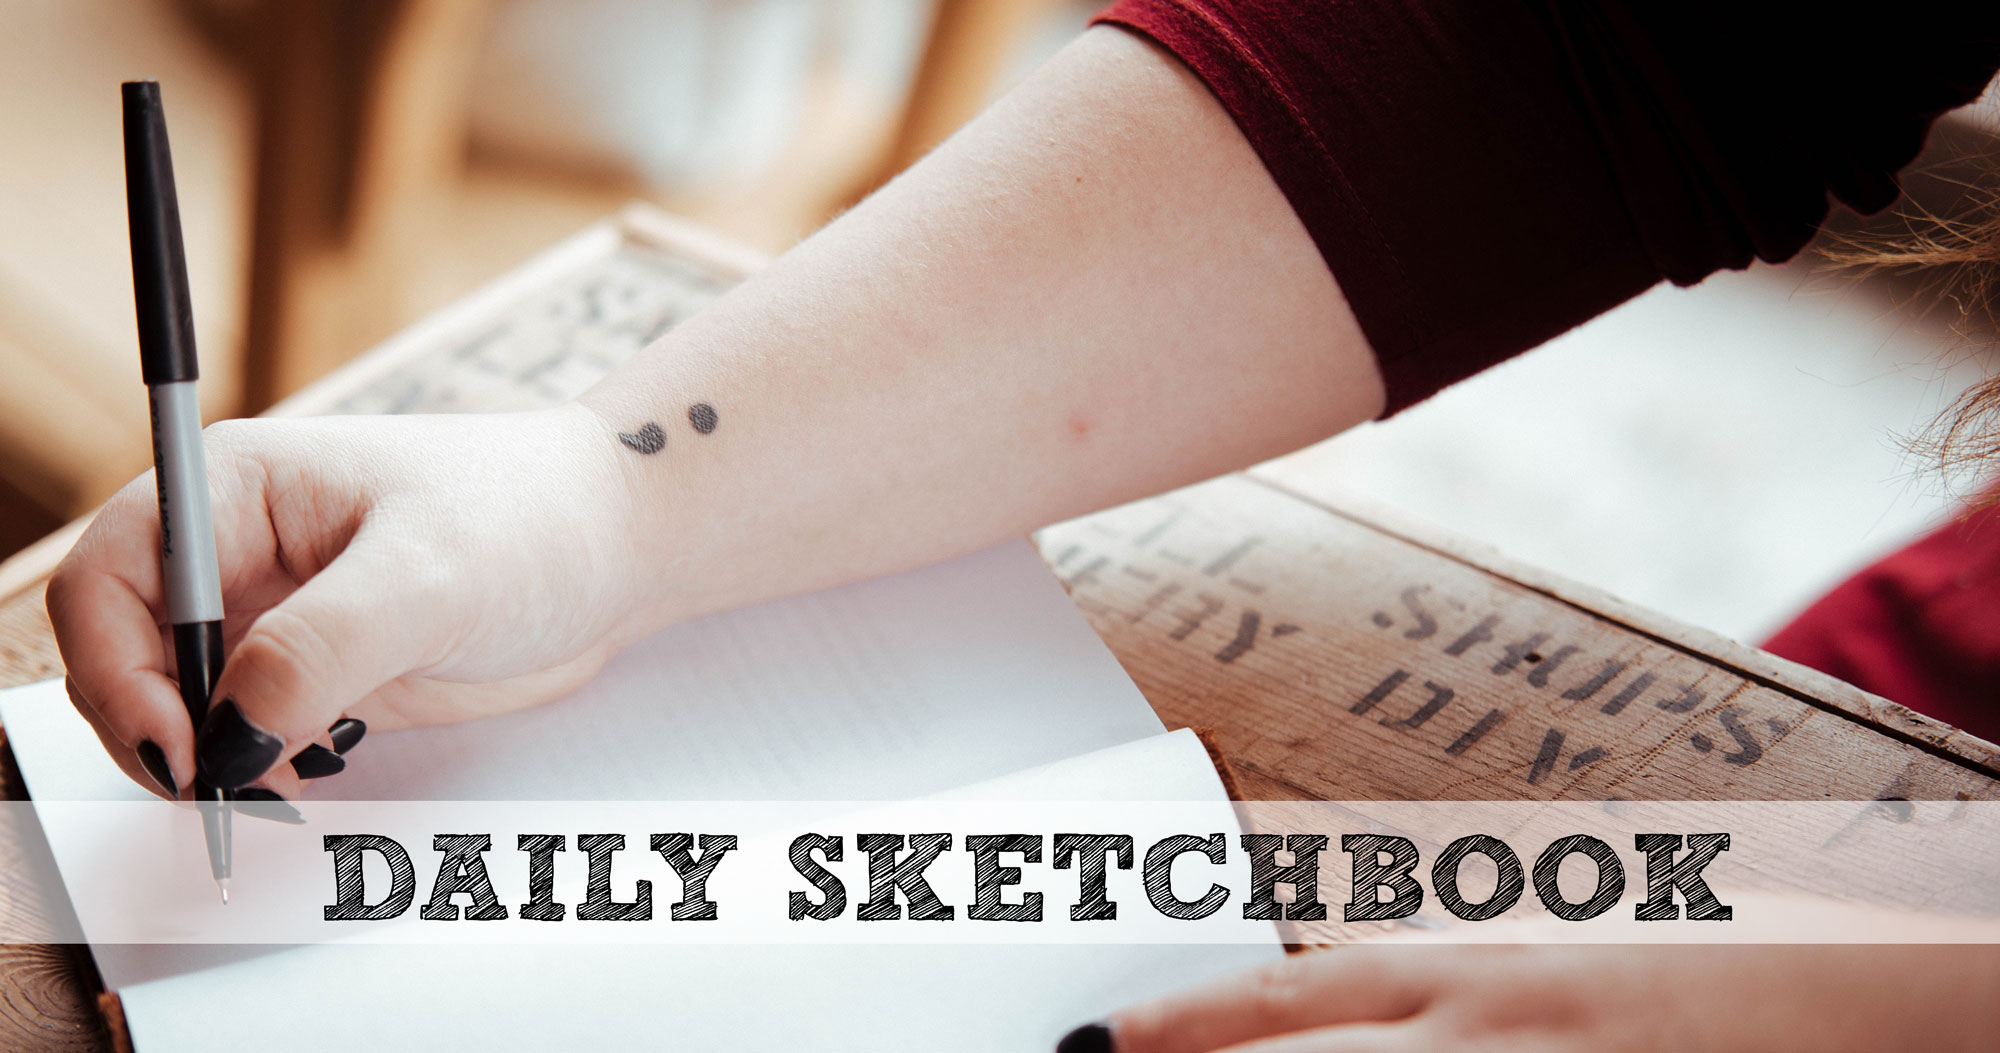 Daily sketchbook activity thumbnail